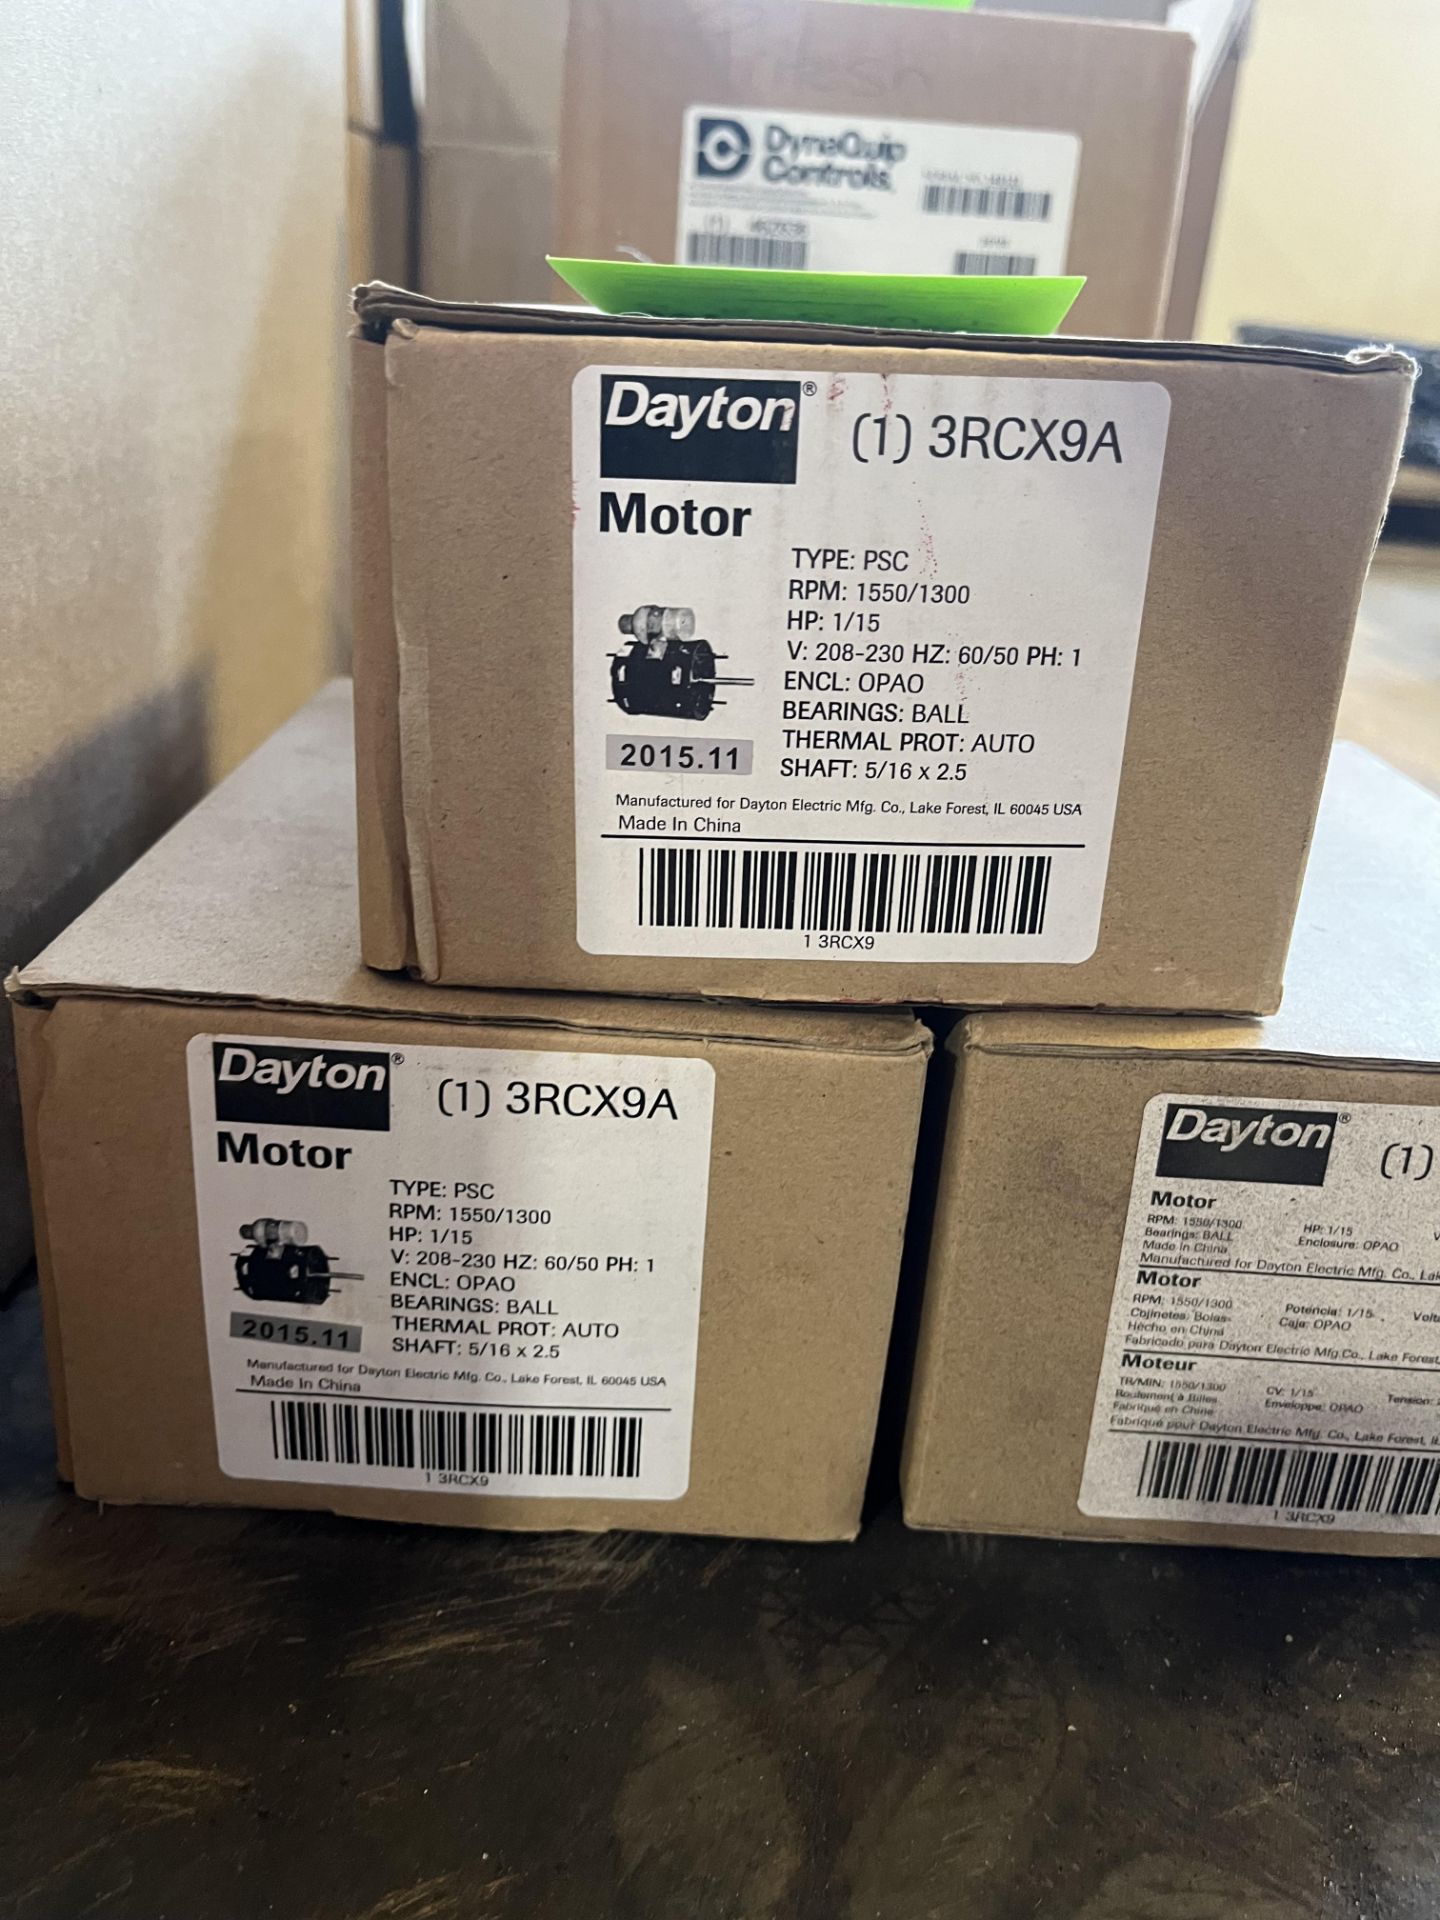 NEW DAYTON ELECTRIC MOTORS, 1/15HP 1550/1300 RPM, TYPE PSC